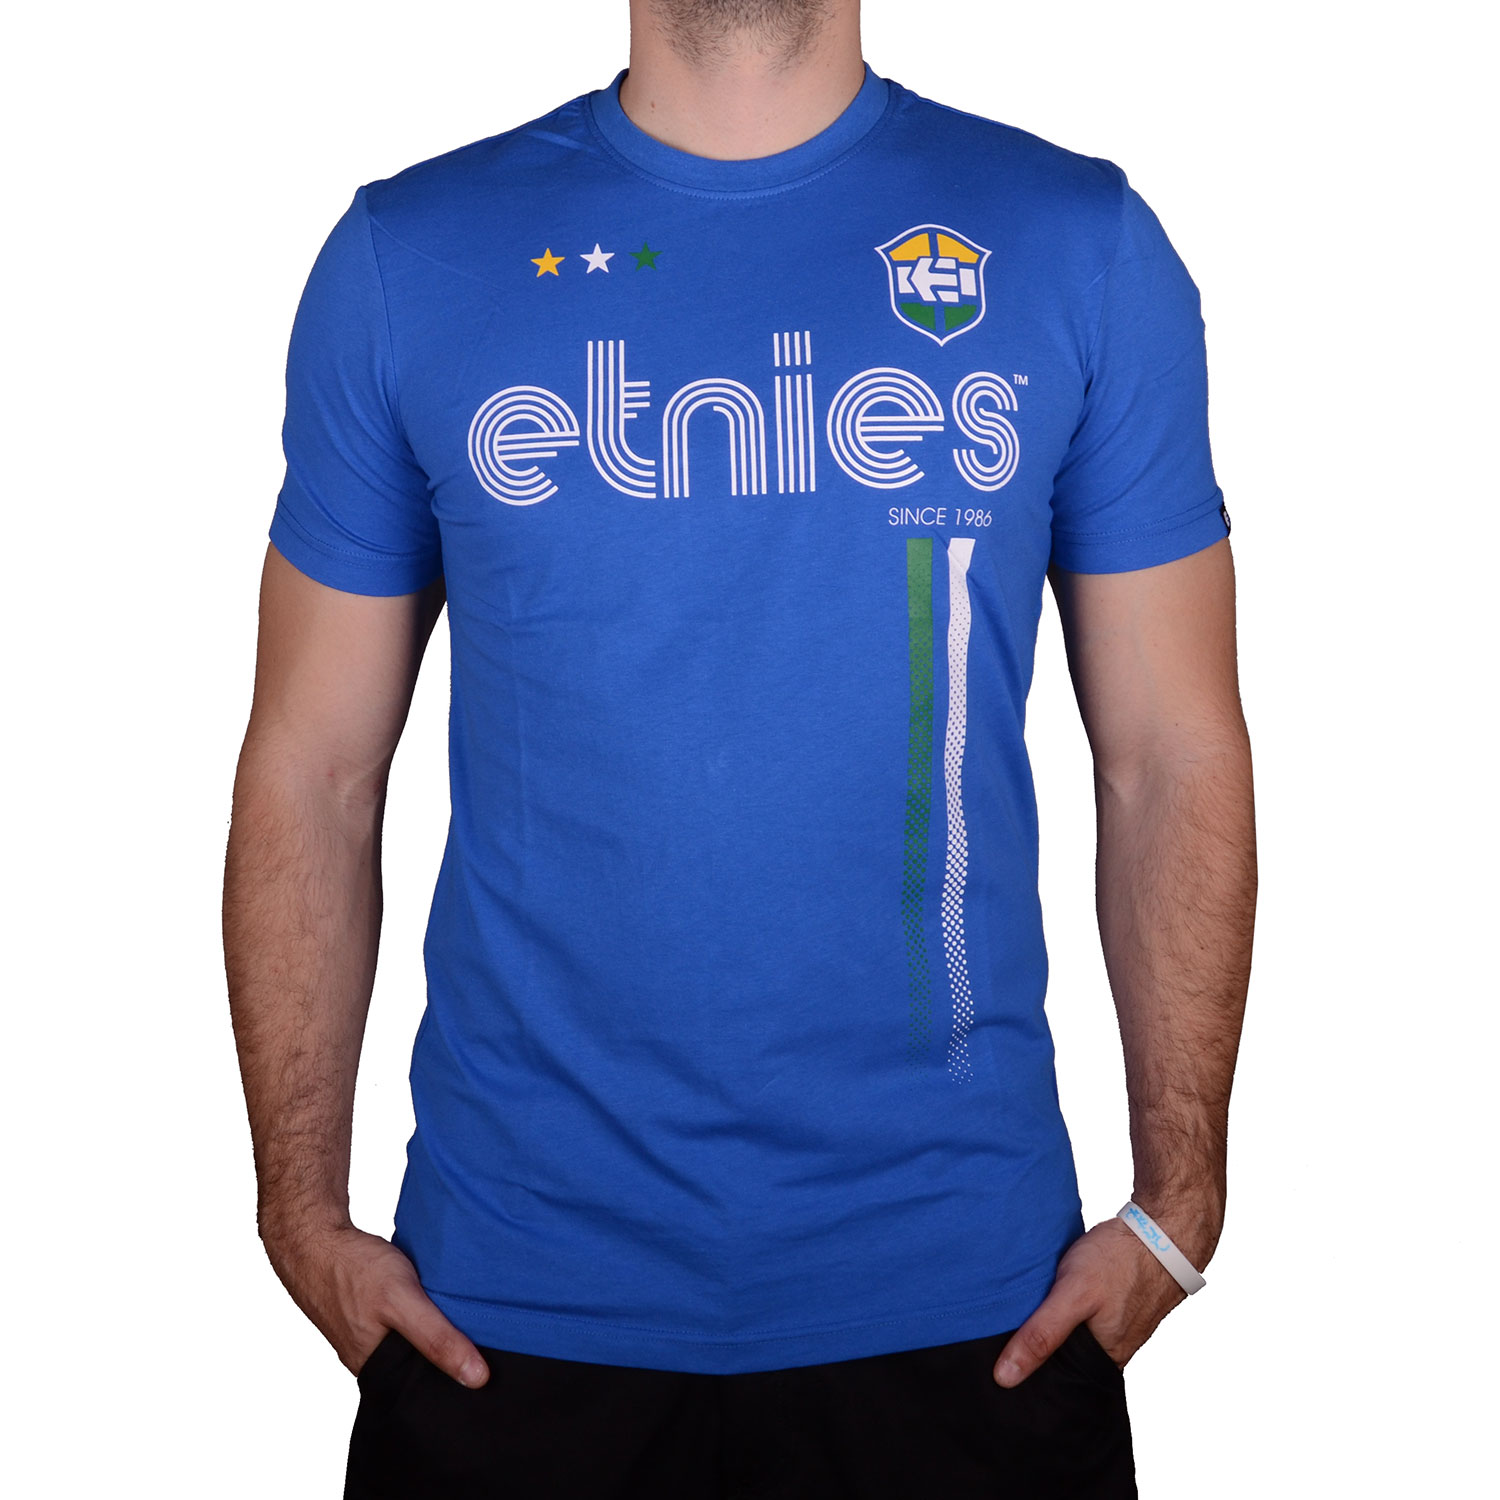 Etnies Tee - 2014 World Cup